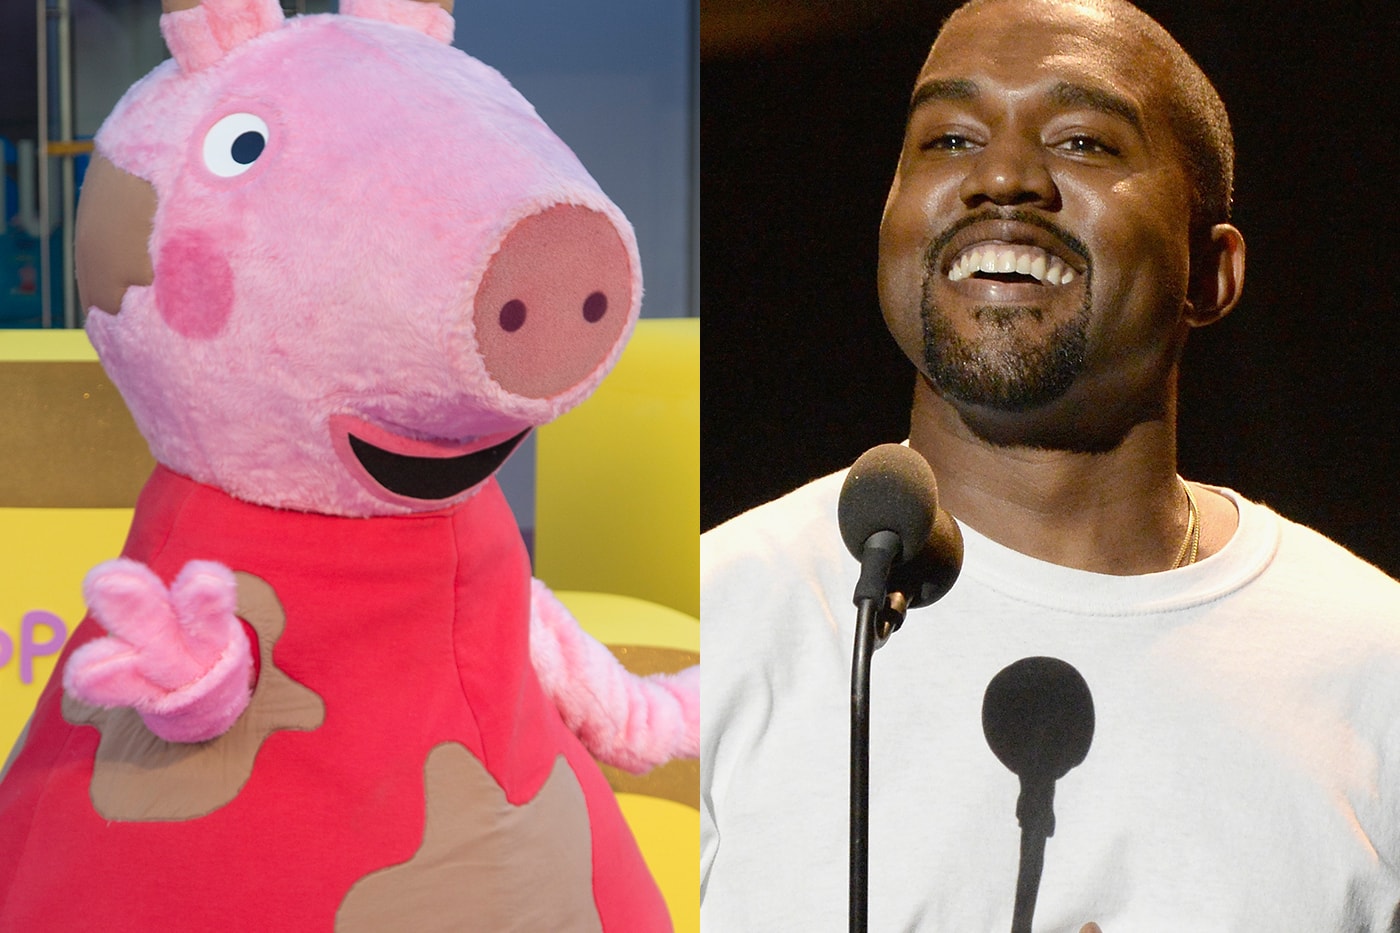 Peppa Pig 6.5 Kanye West DONDA album pitchfork review twitter comparison Ye British cartoon music 